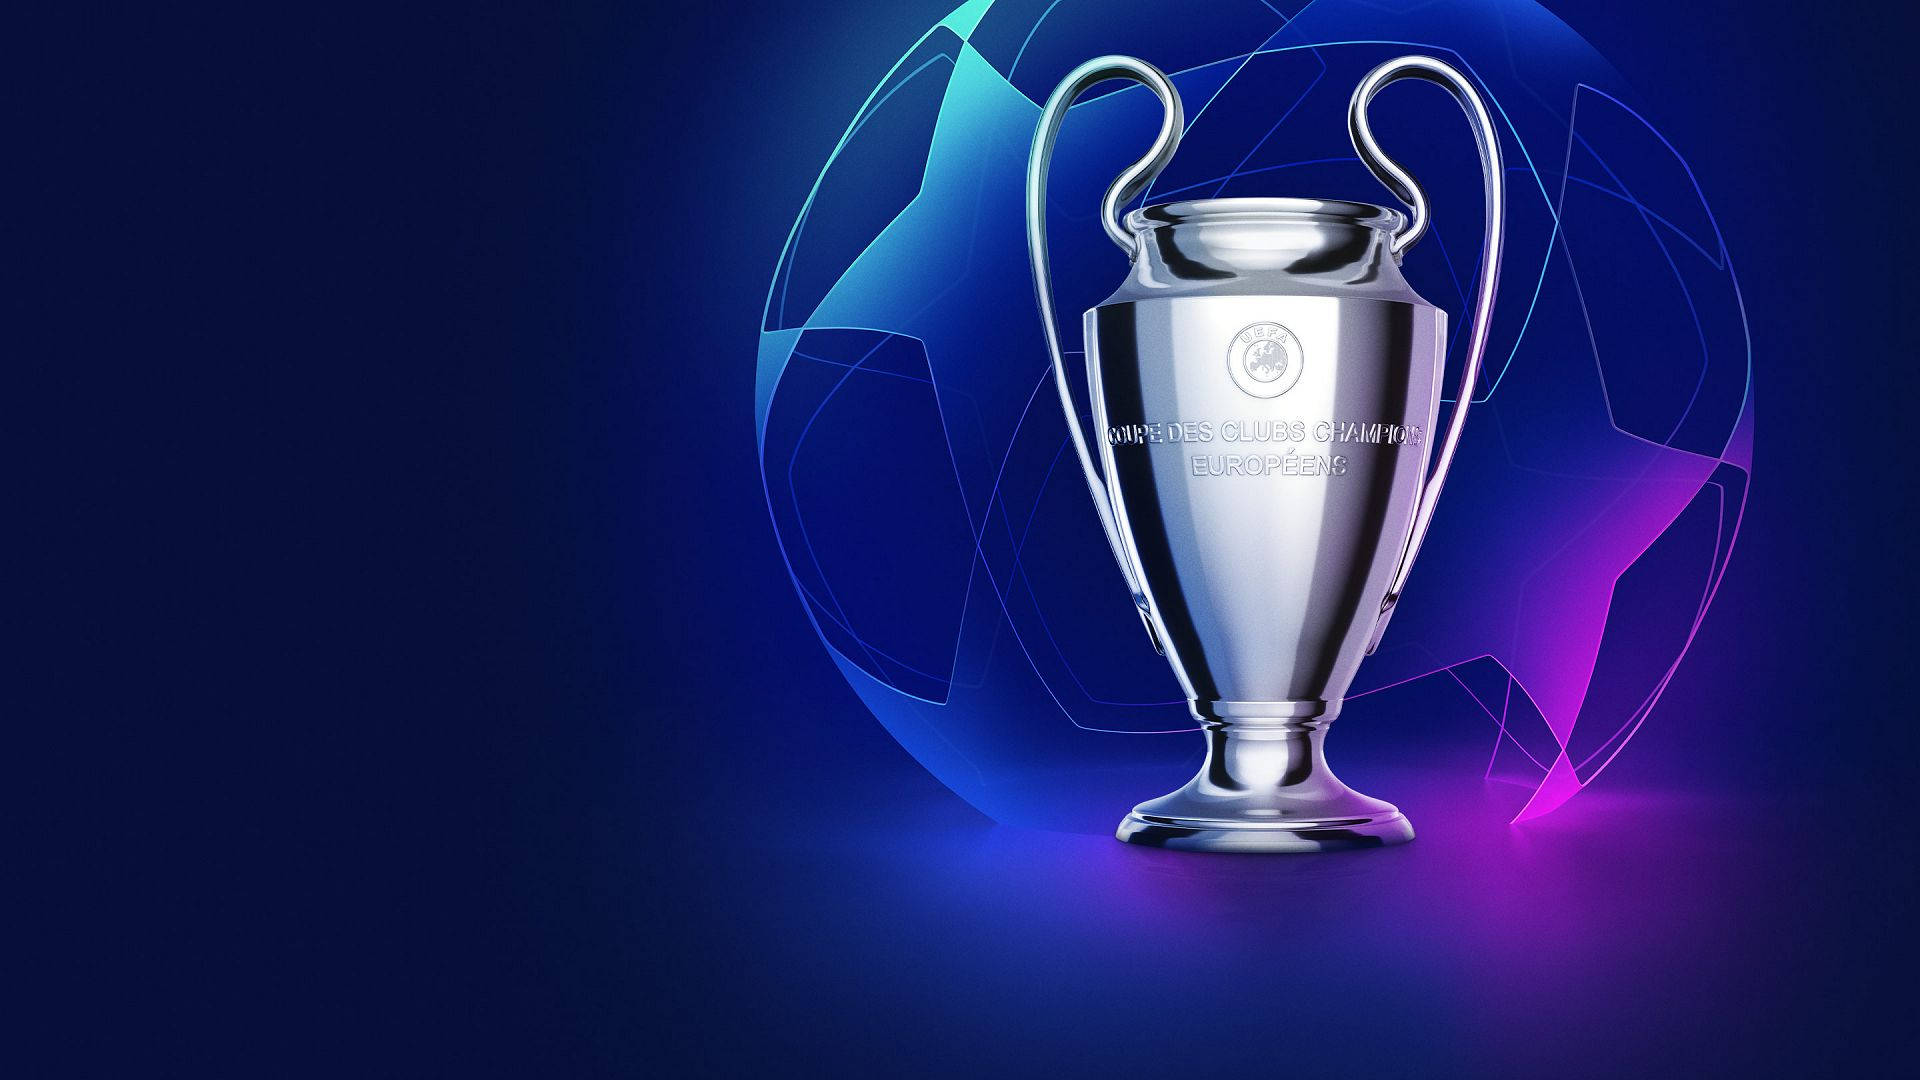 Uefa Champions League Football Club Trophy